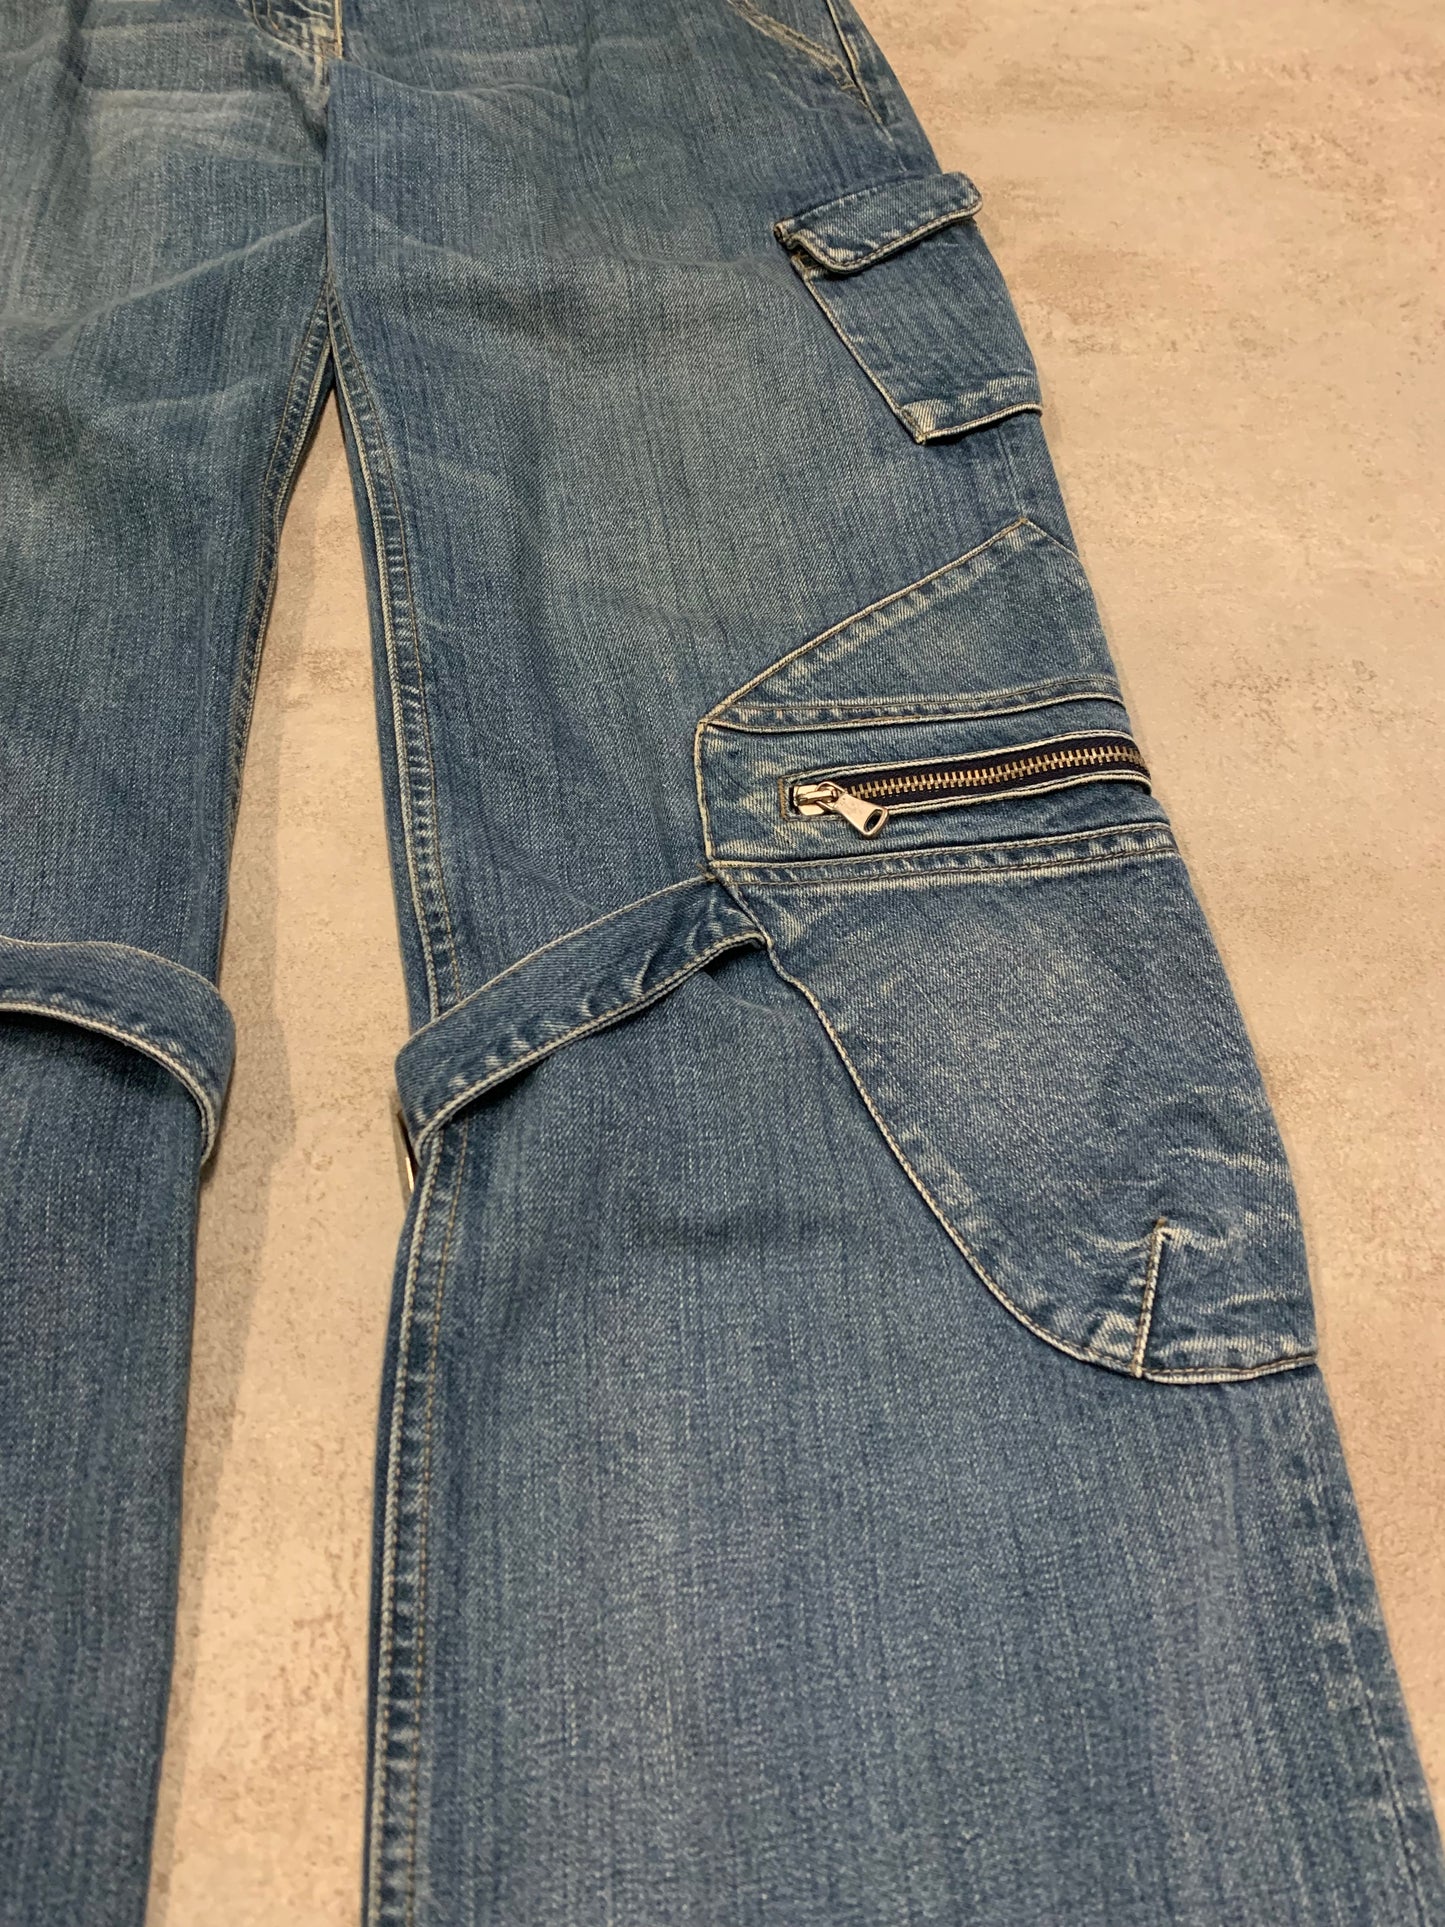 Pantalones Vintage Armani Jeans ‘Bondage’ 00’s - M